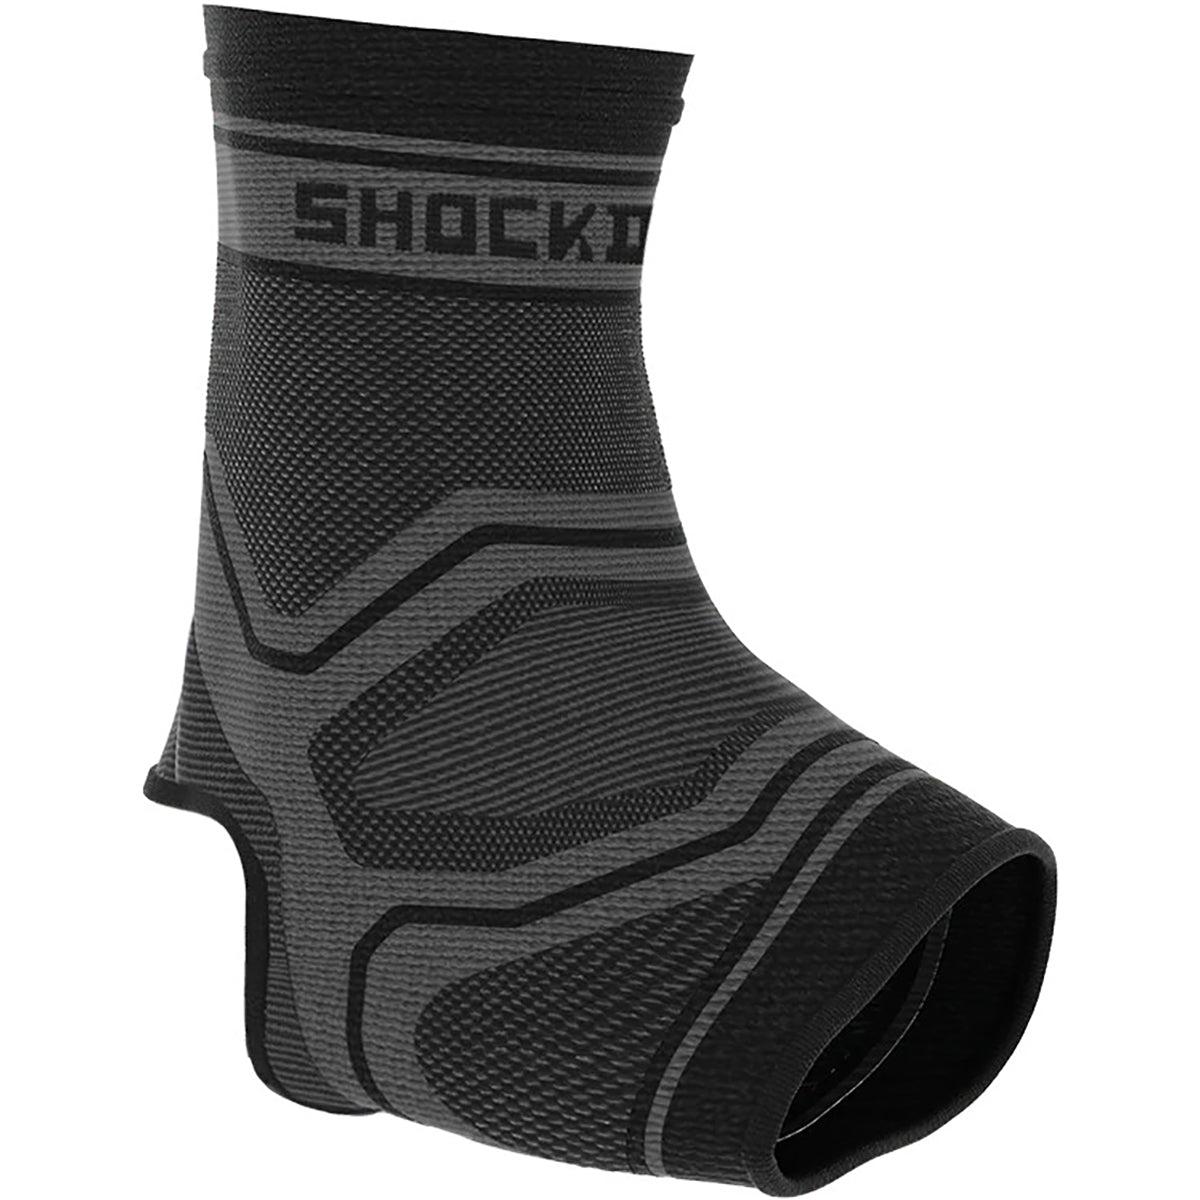 Shock Doctor Compression Knit Ankle Sleeve - Gray/Black Shock Doctor